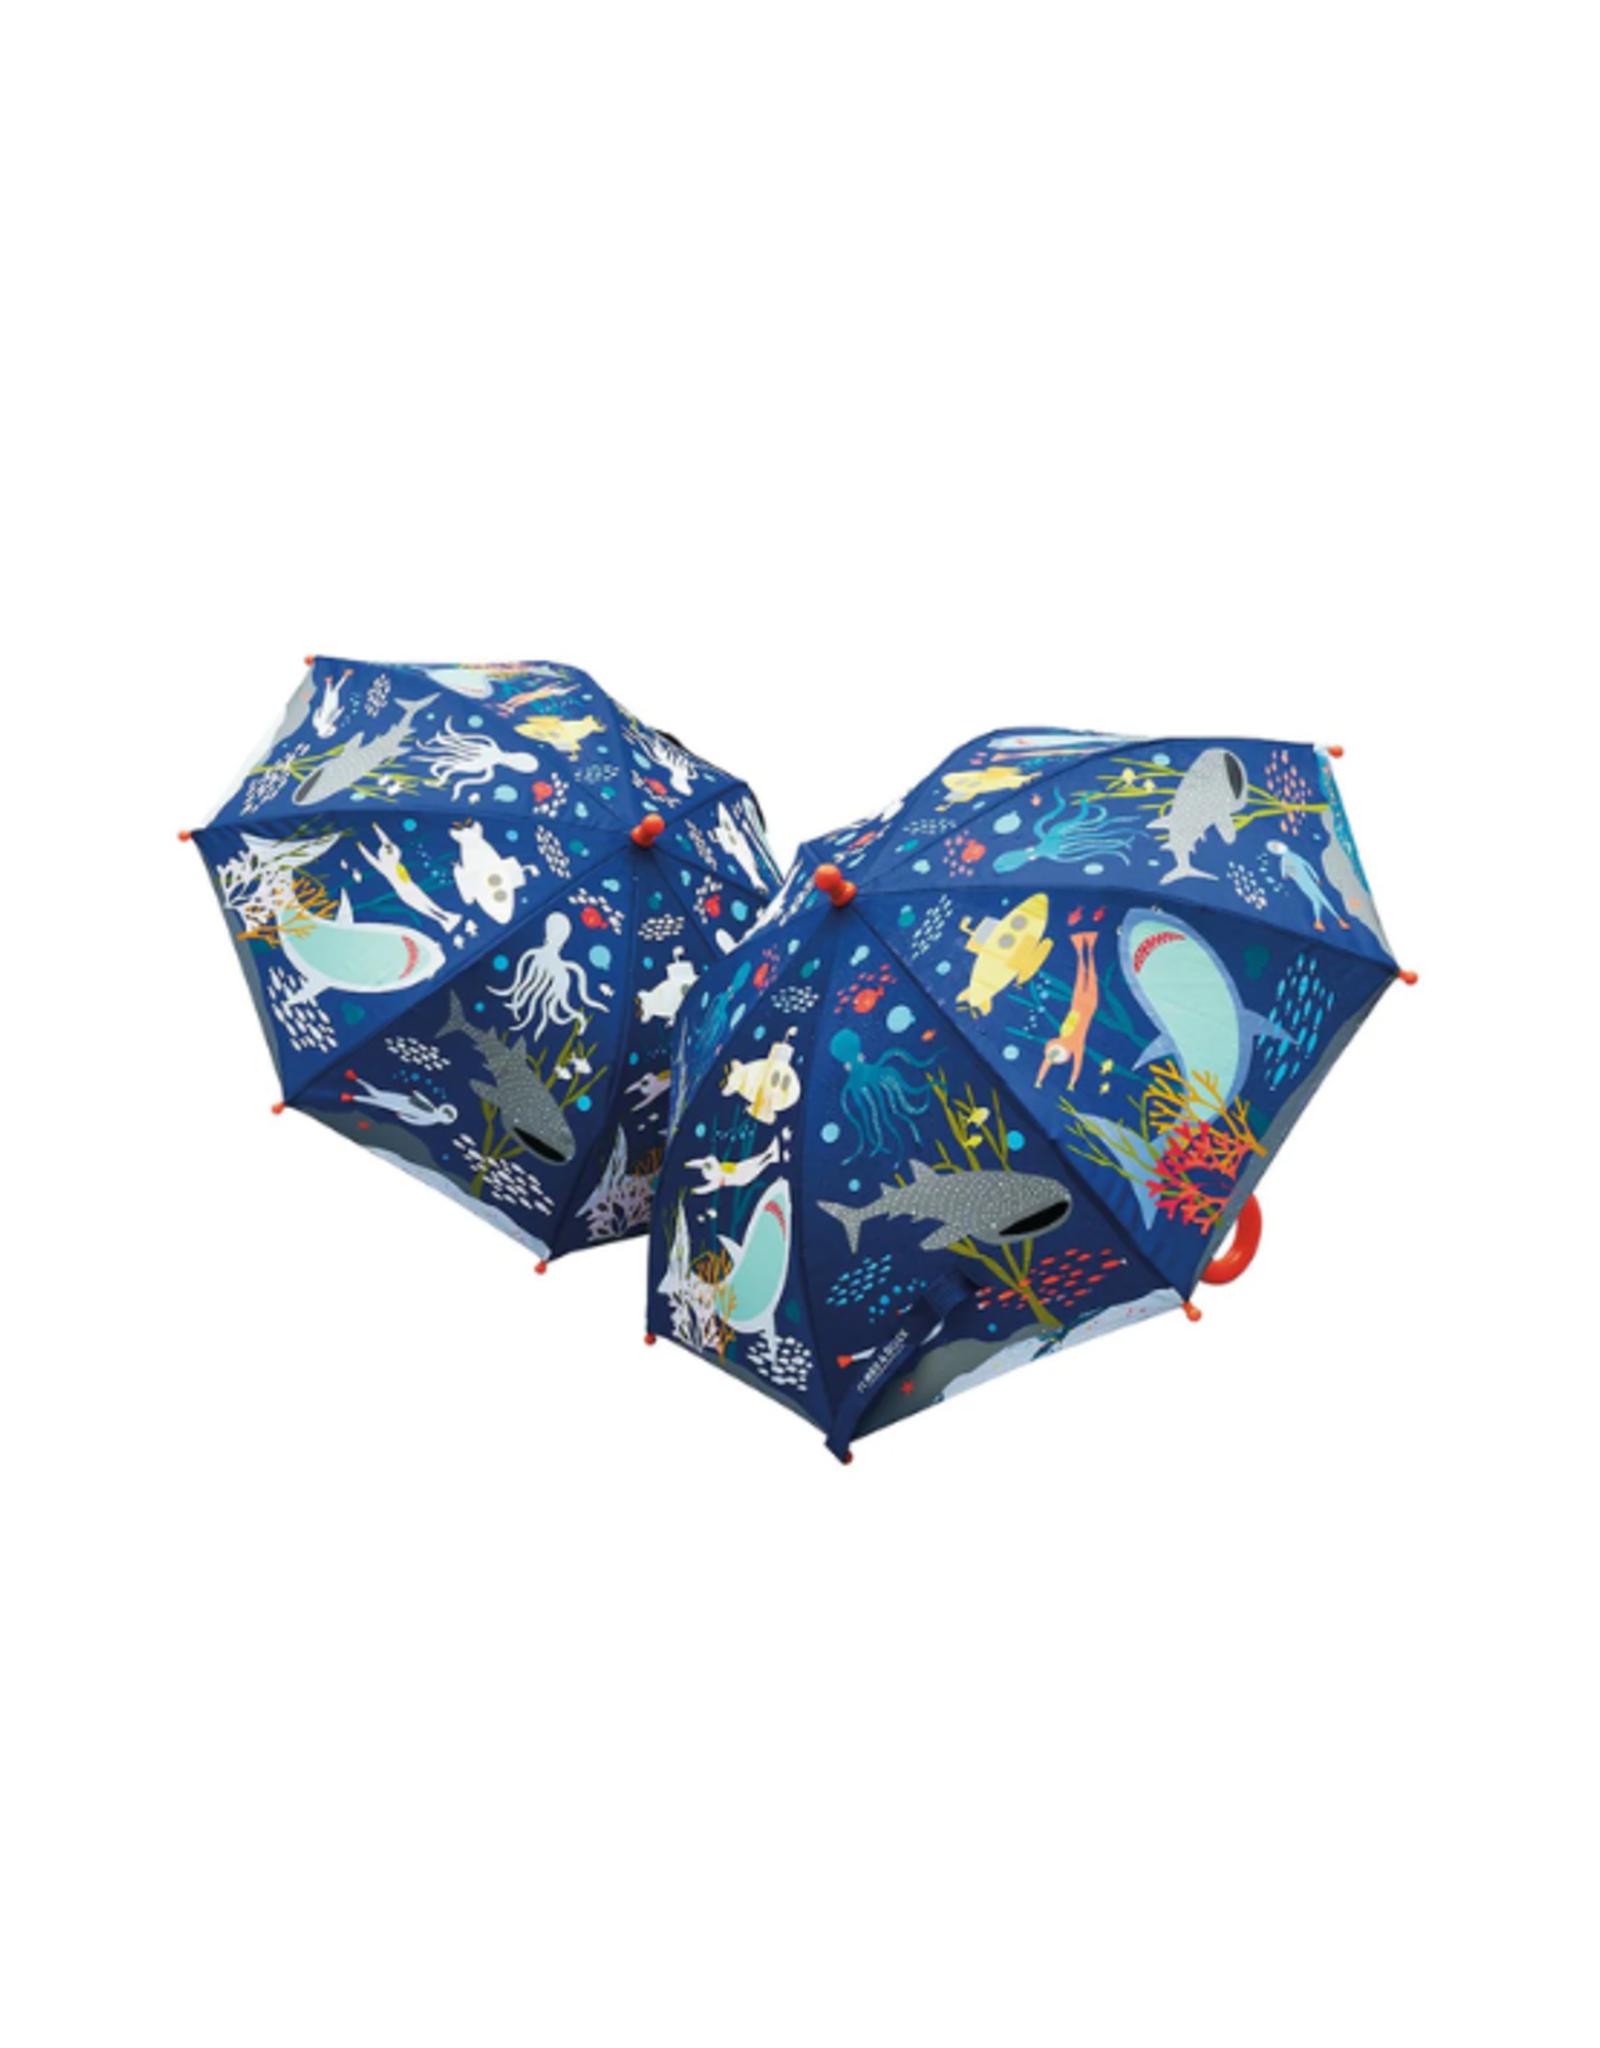 Floss & Rock Floss & Rock - Deep Sea Colour Changing Umbrella